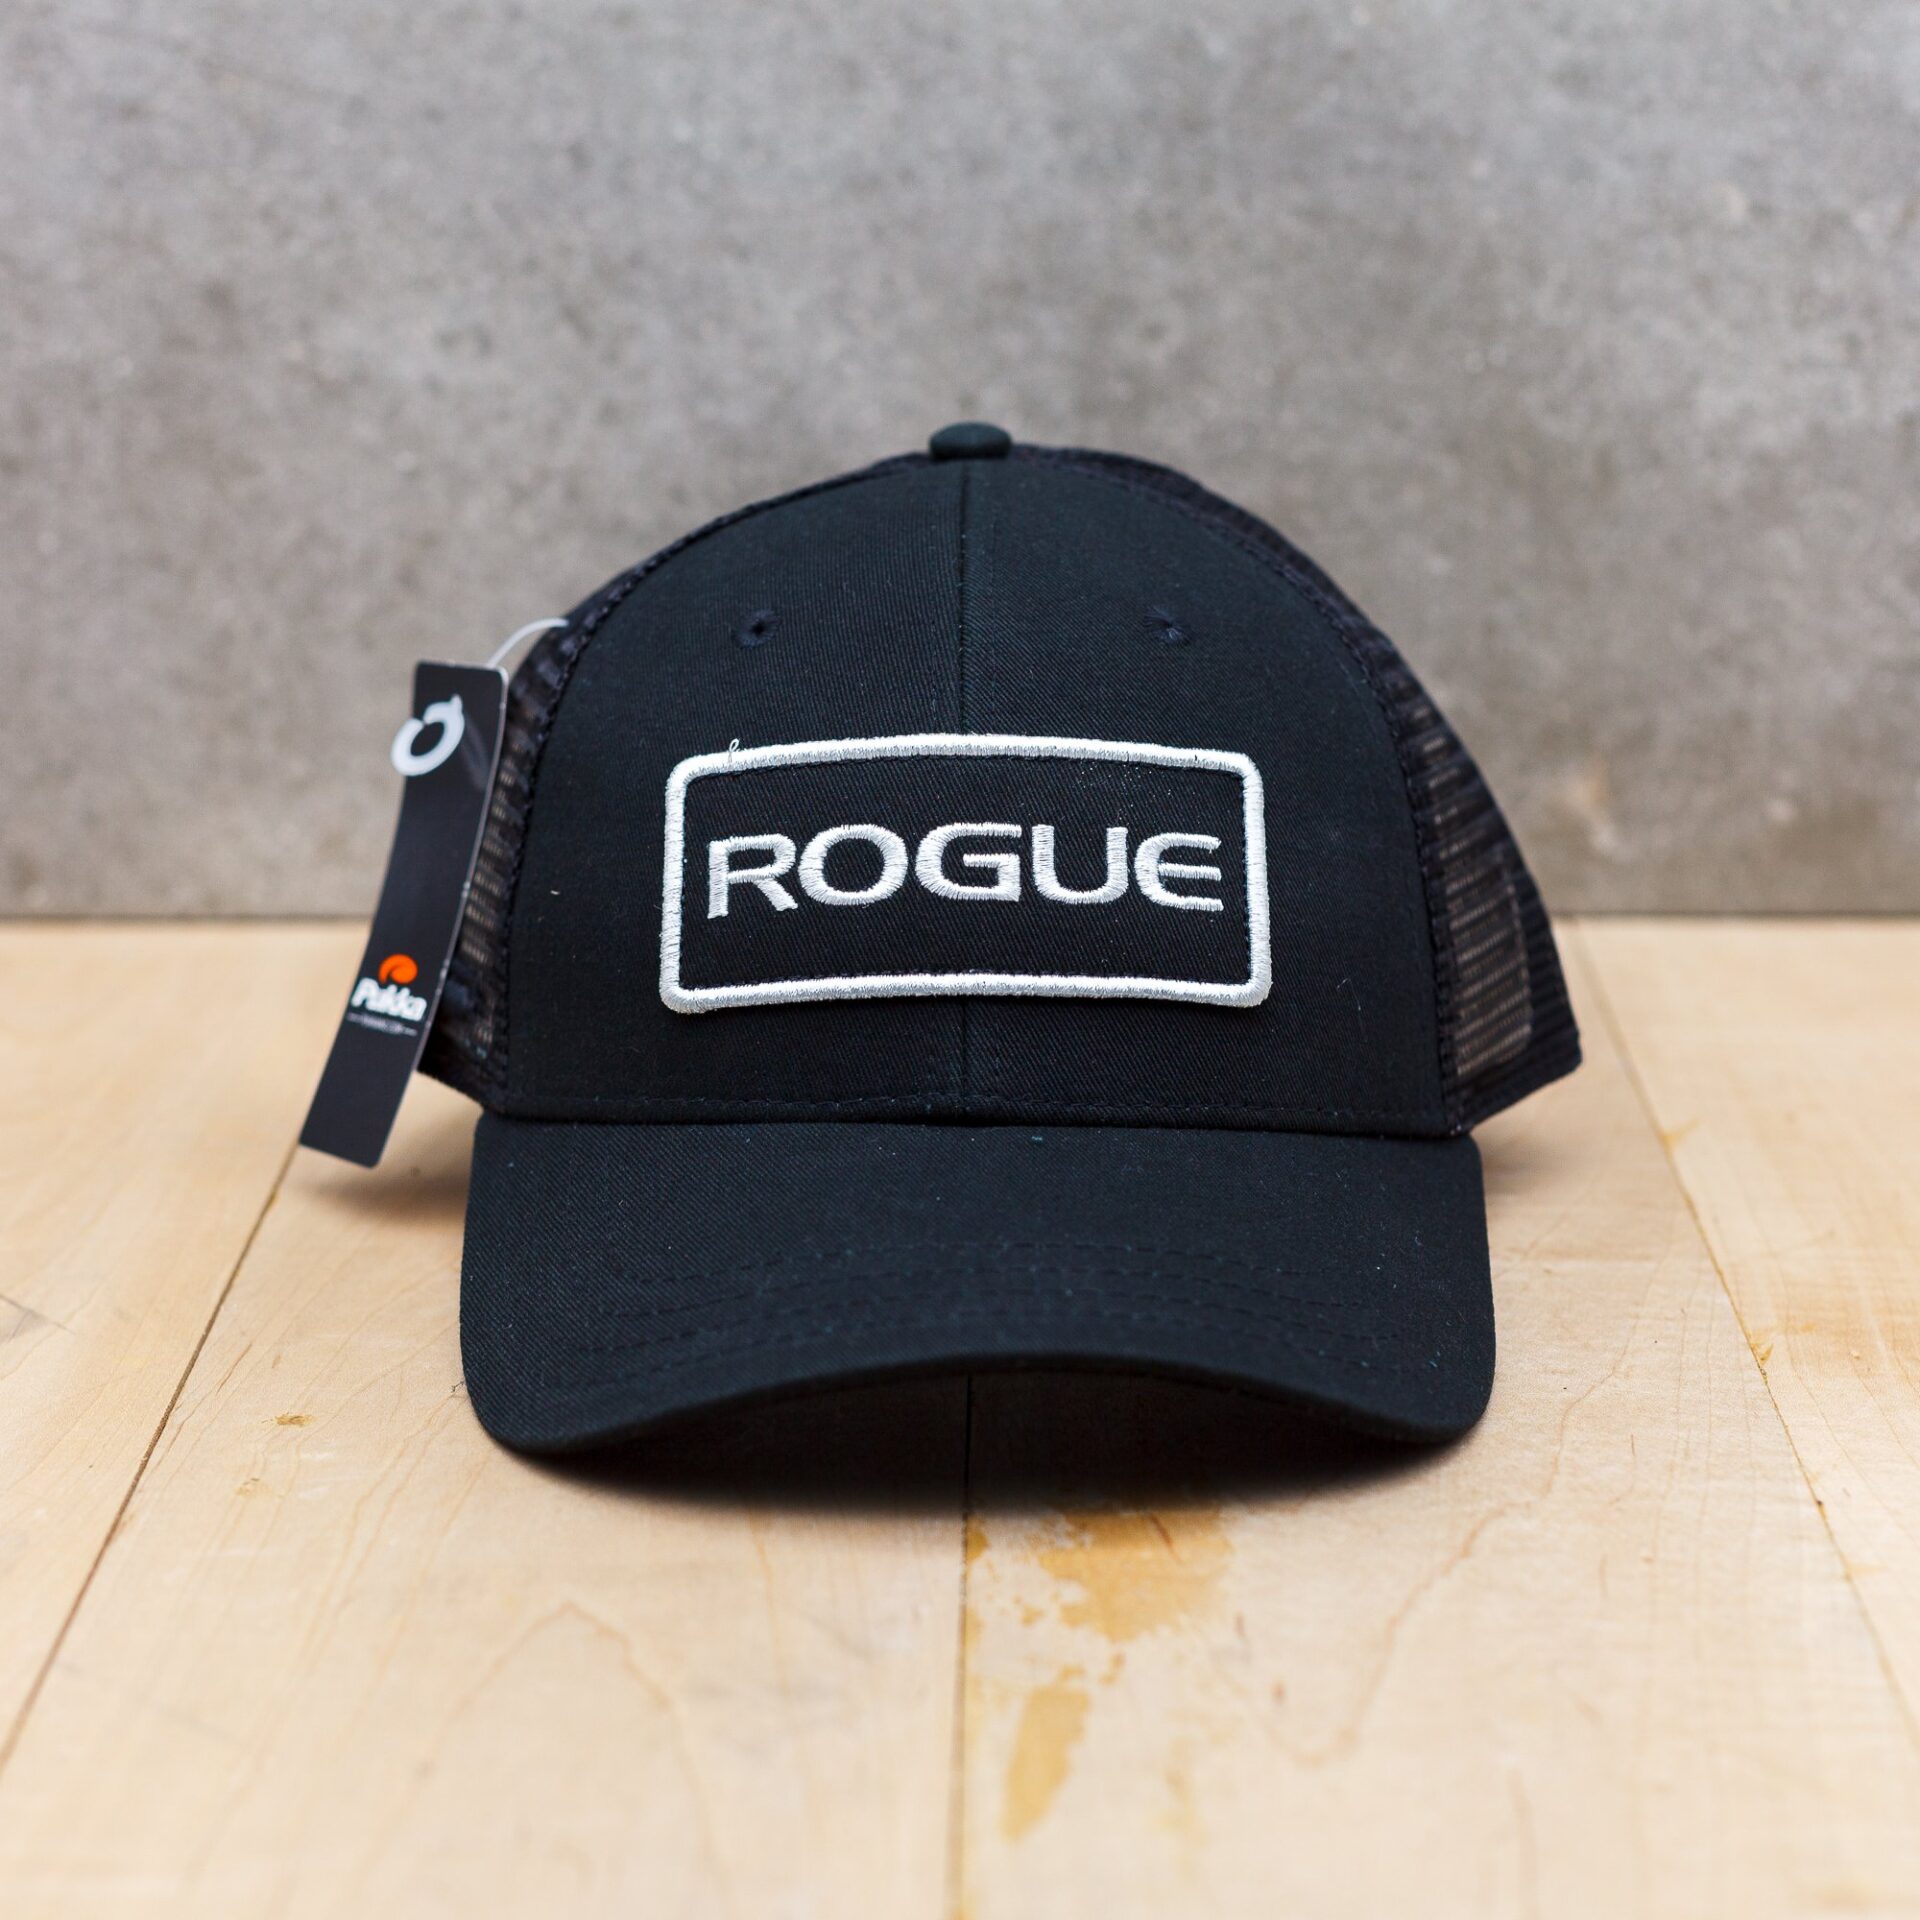 rogue-patch-trucker-hat-black-01-2000px.jpg